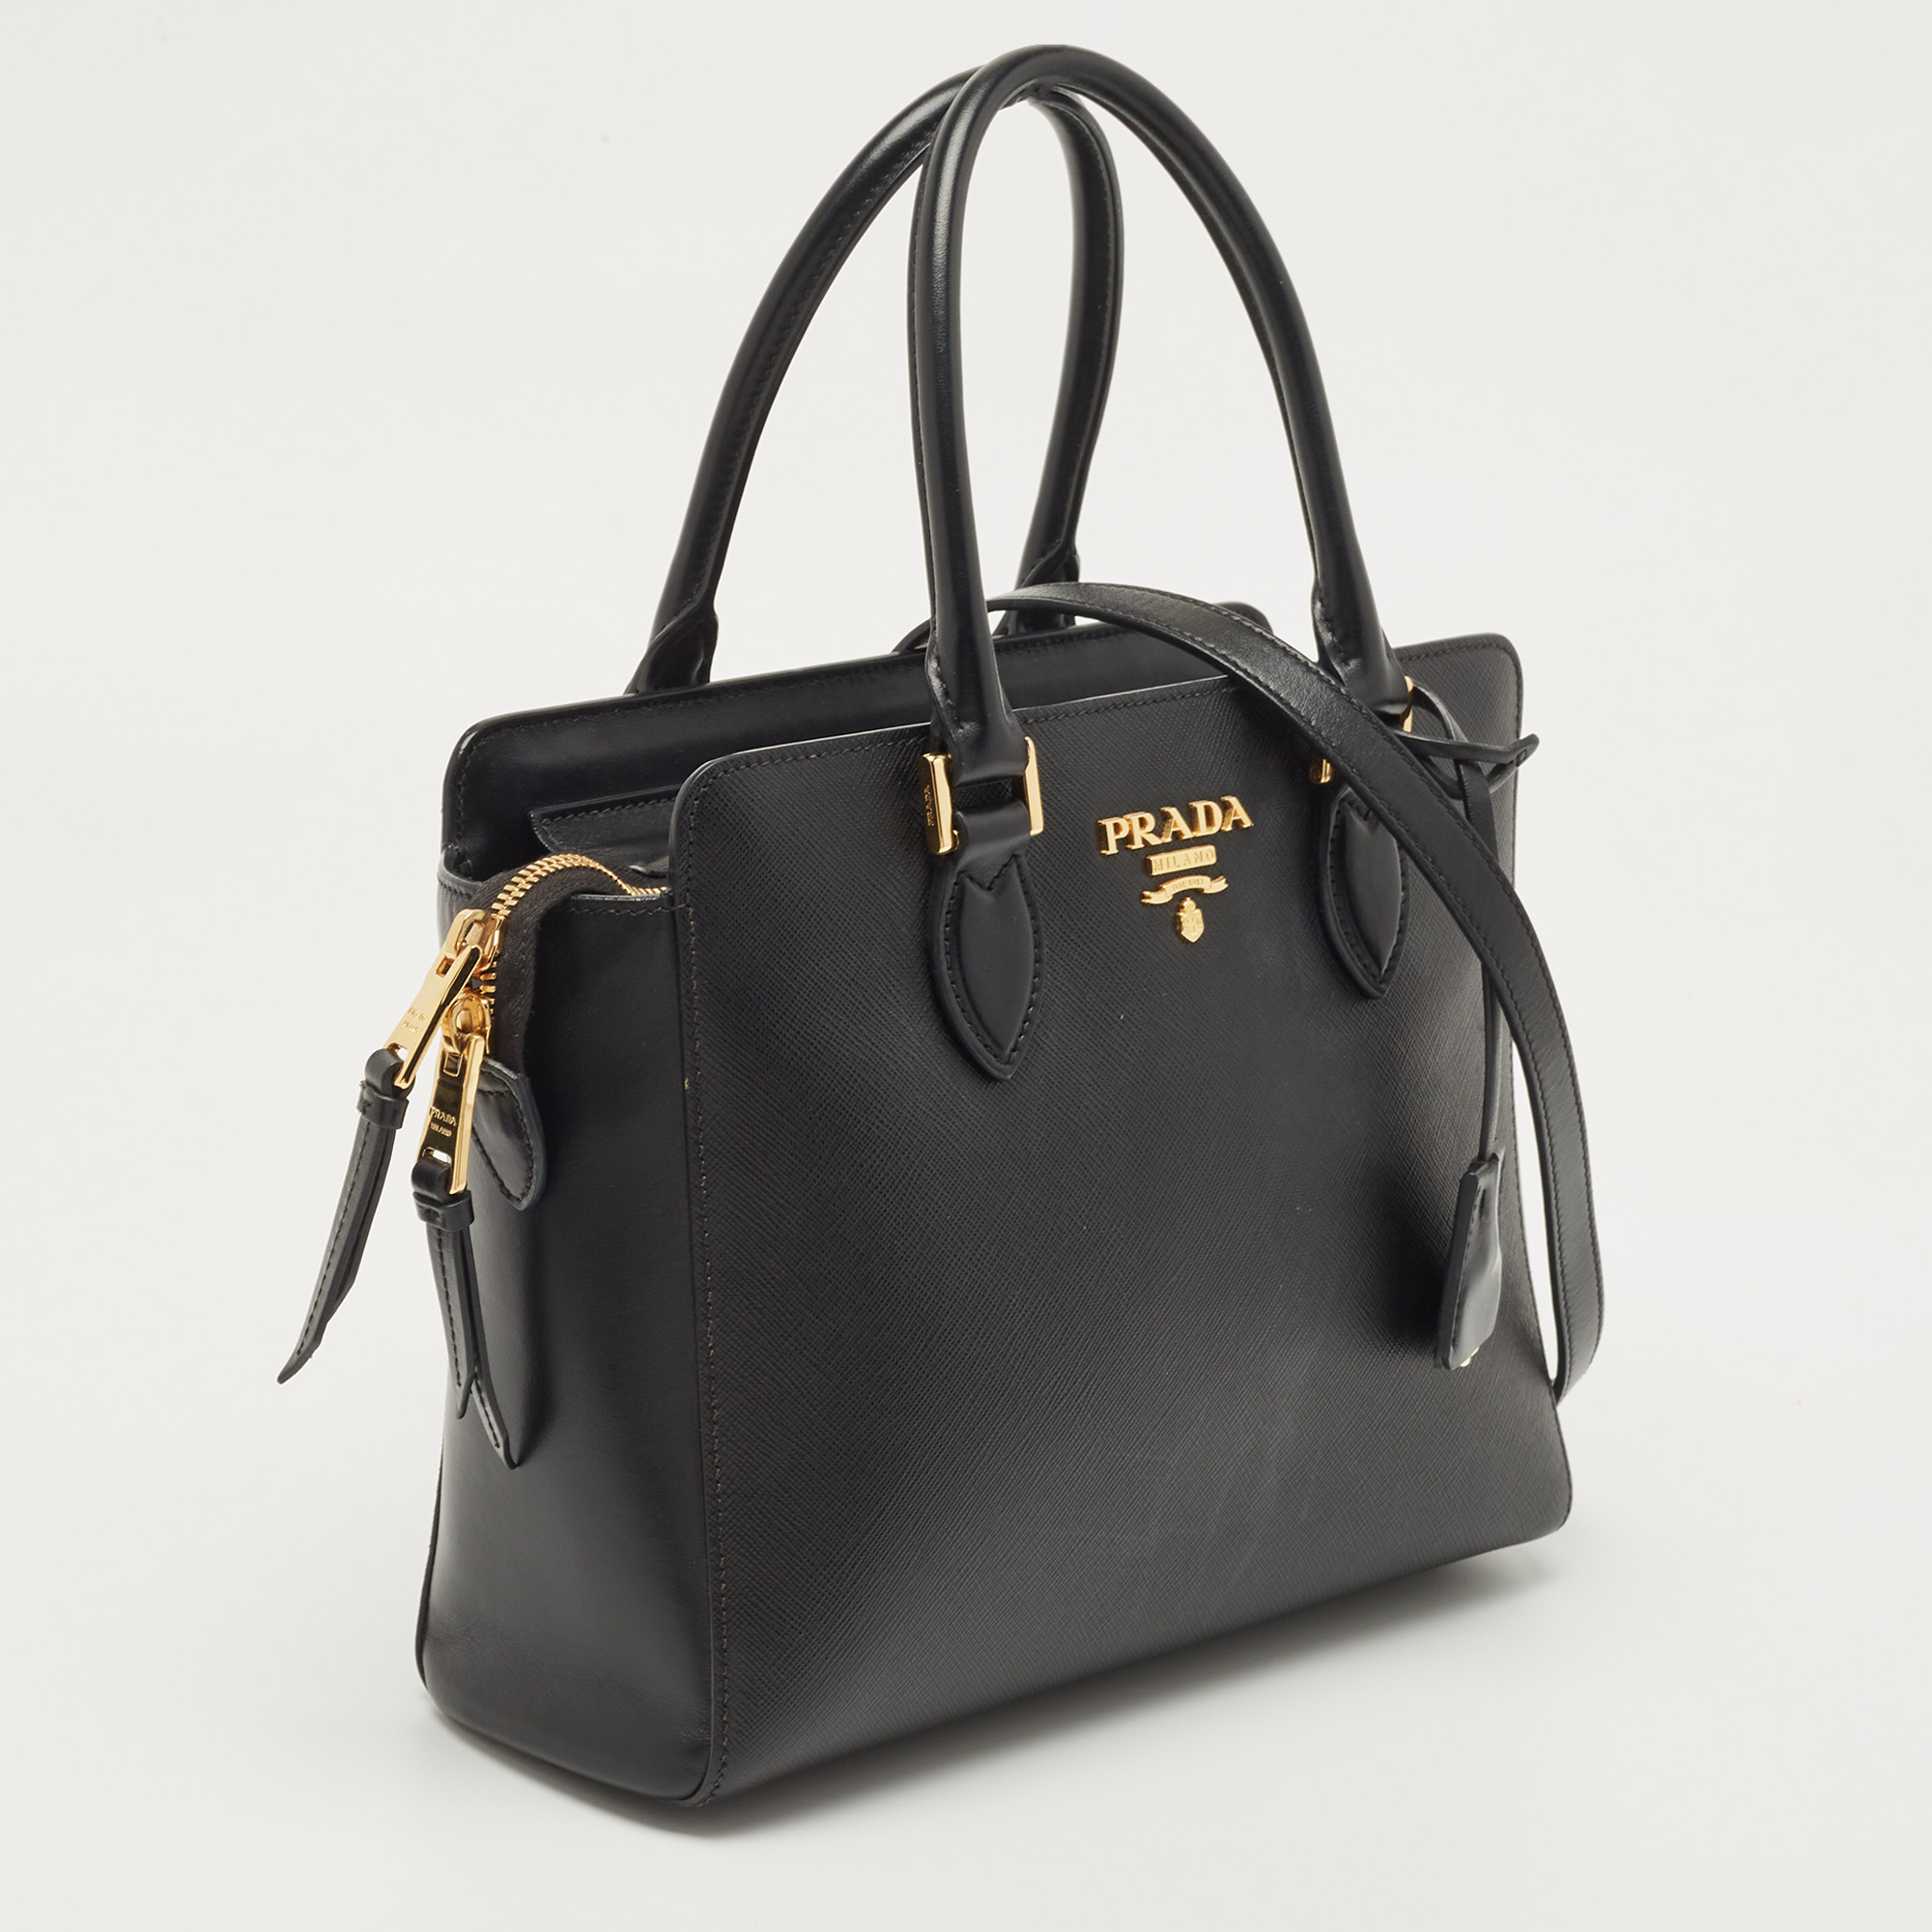 Prada Black Saffiano Leather Tote Bag